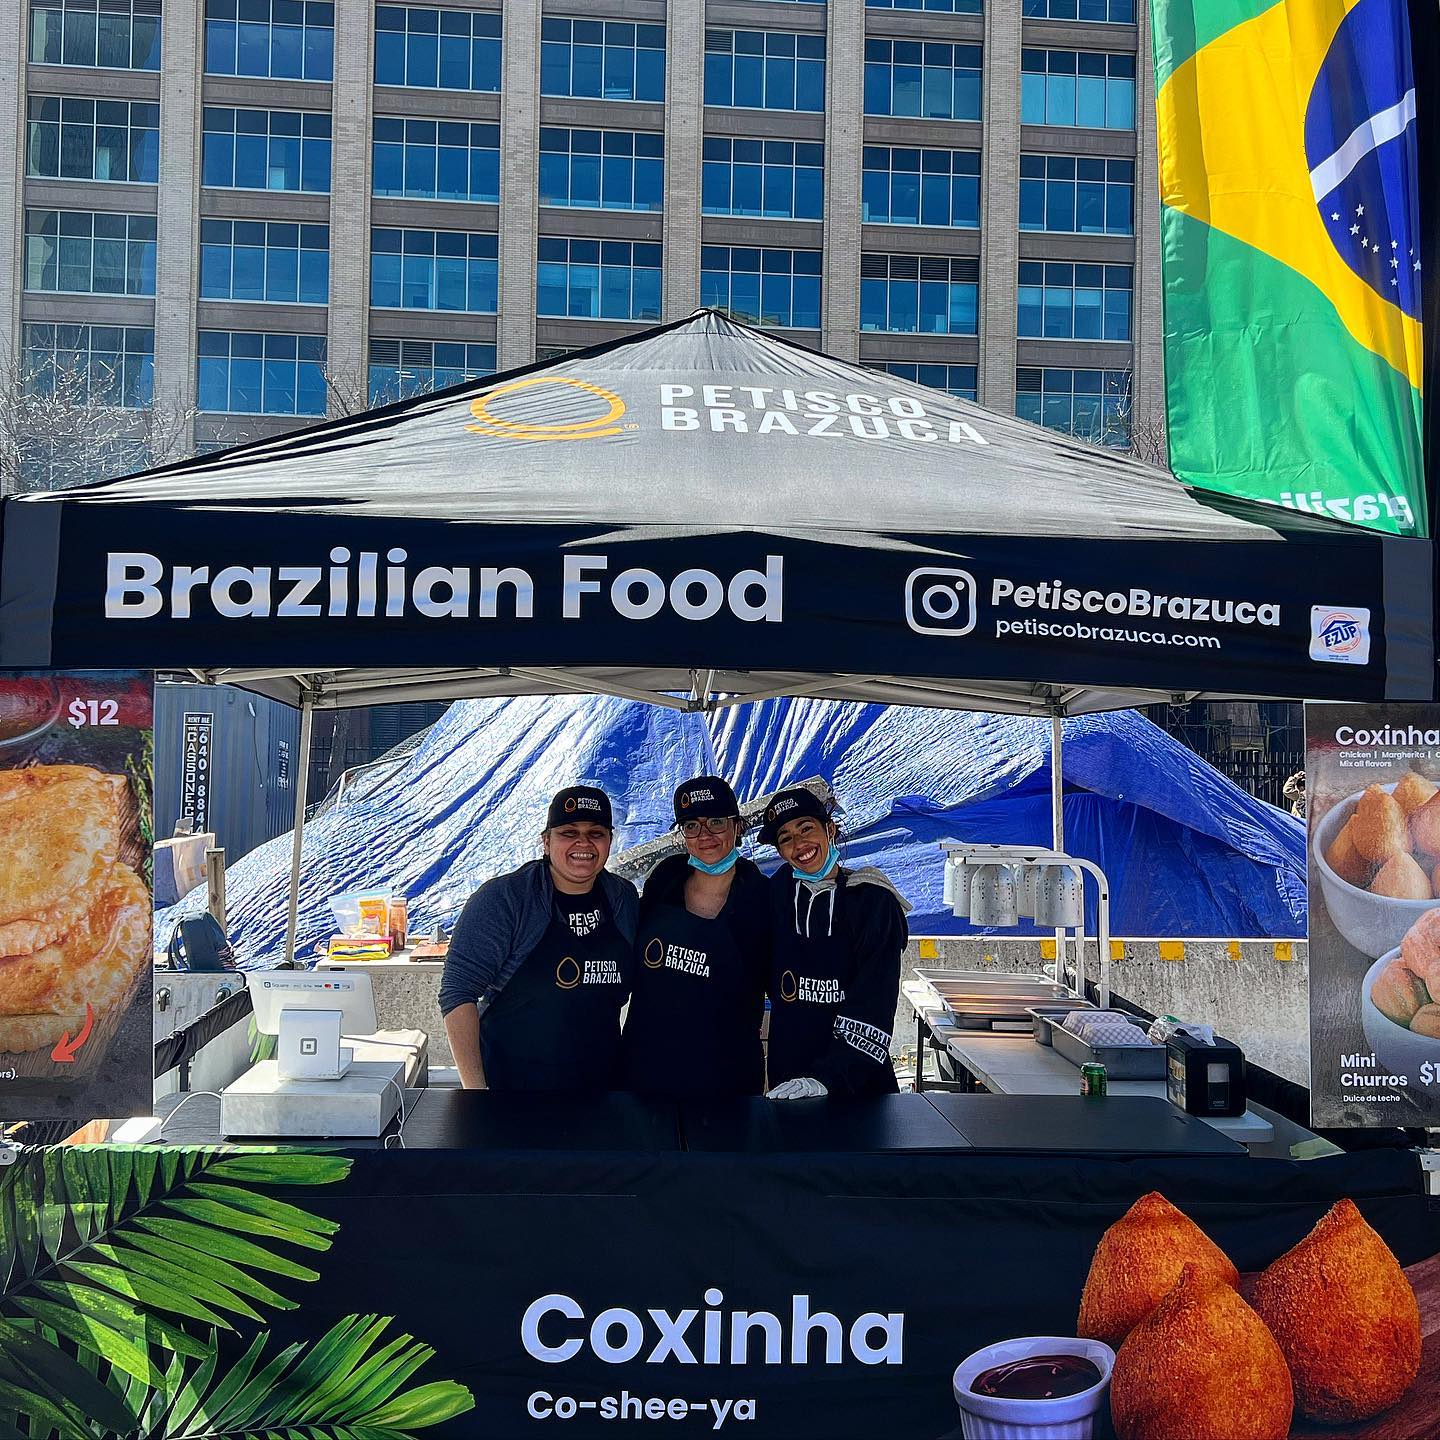 Today we’re here at @smorgasburg in Jersey City till 6:00pm. Come and get some coxinhas 🇺🇸🇧🇷
.
.
.
. 
.
#petiscobrazuca #smorgasburg #brazilianfood #cozinha #pastel #brazilianempanadas